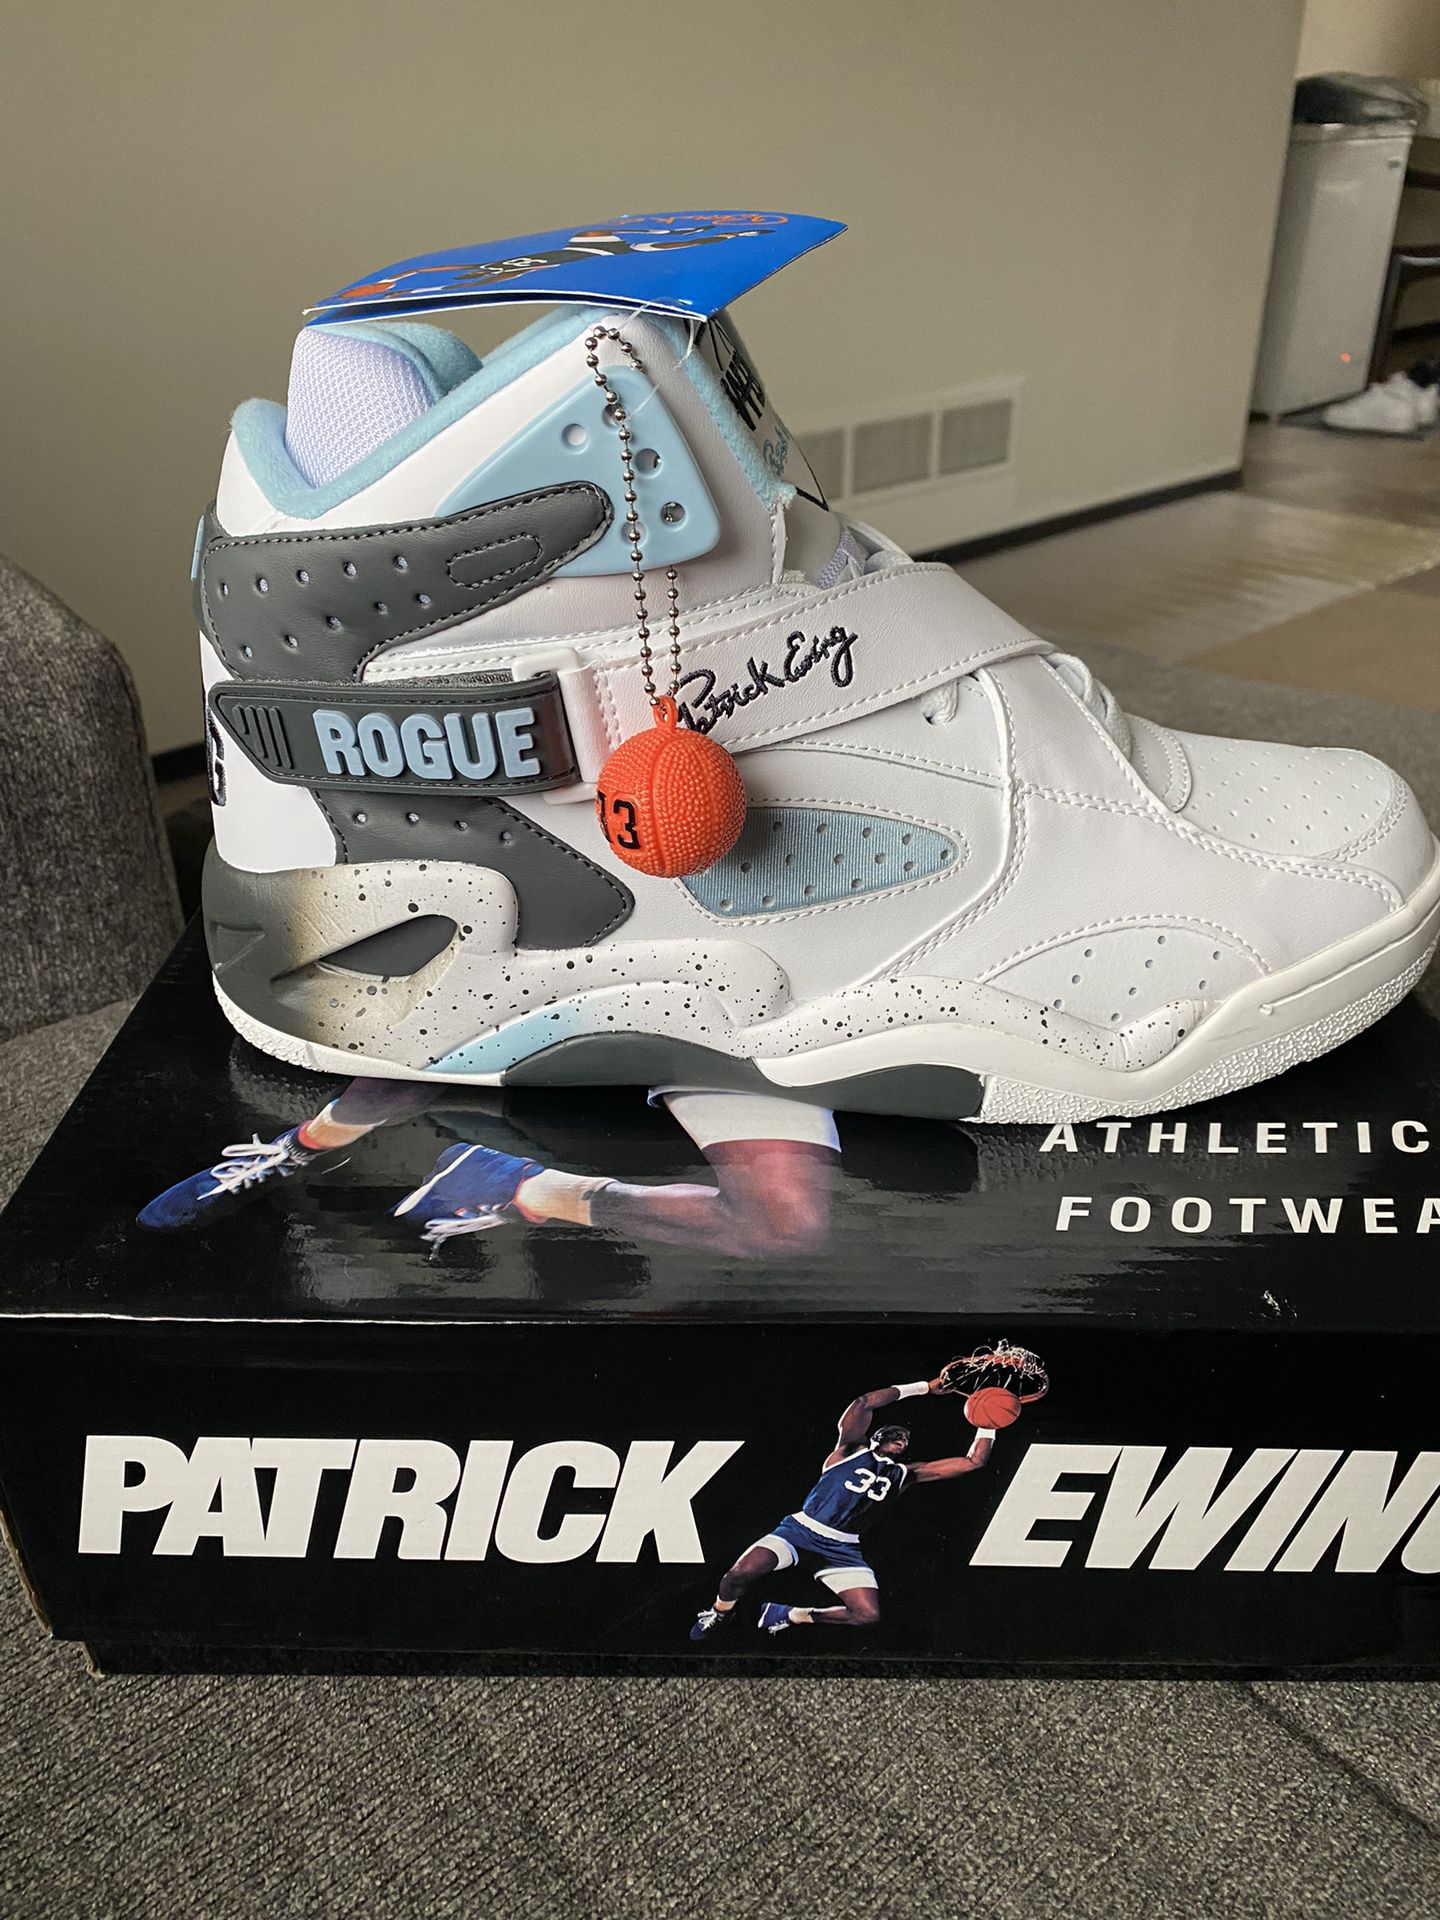 Patrick Ewing’s Size 11